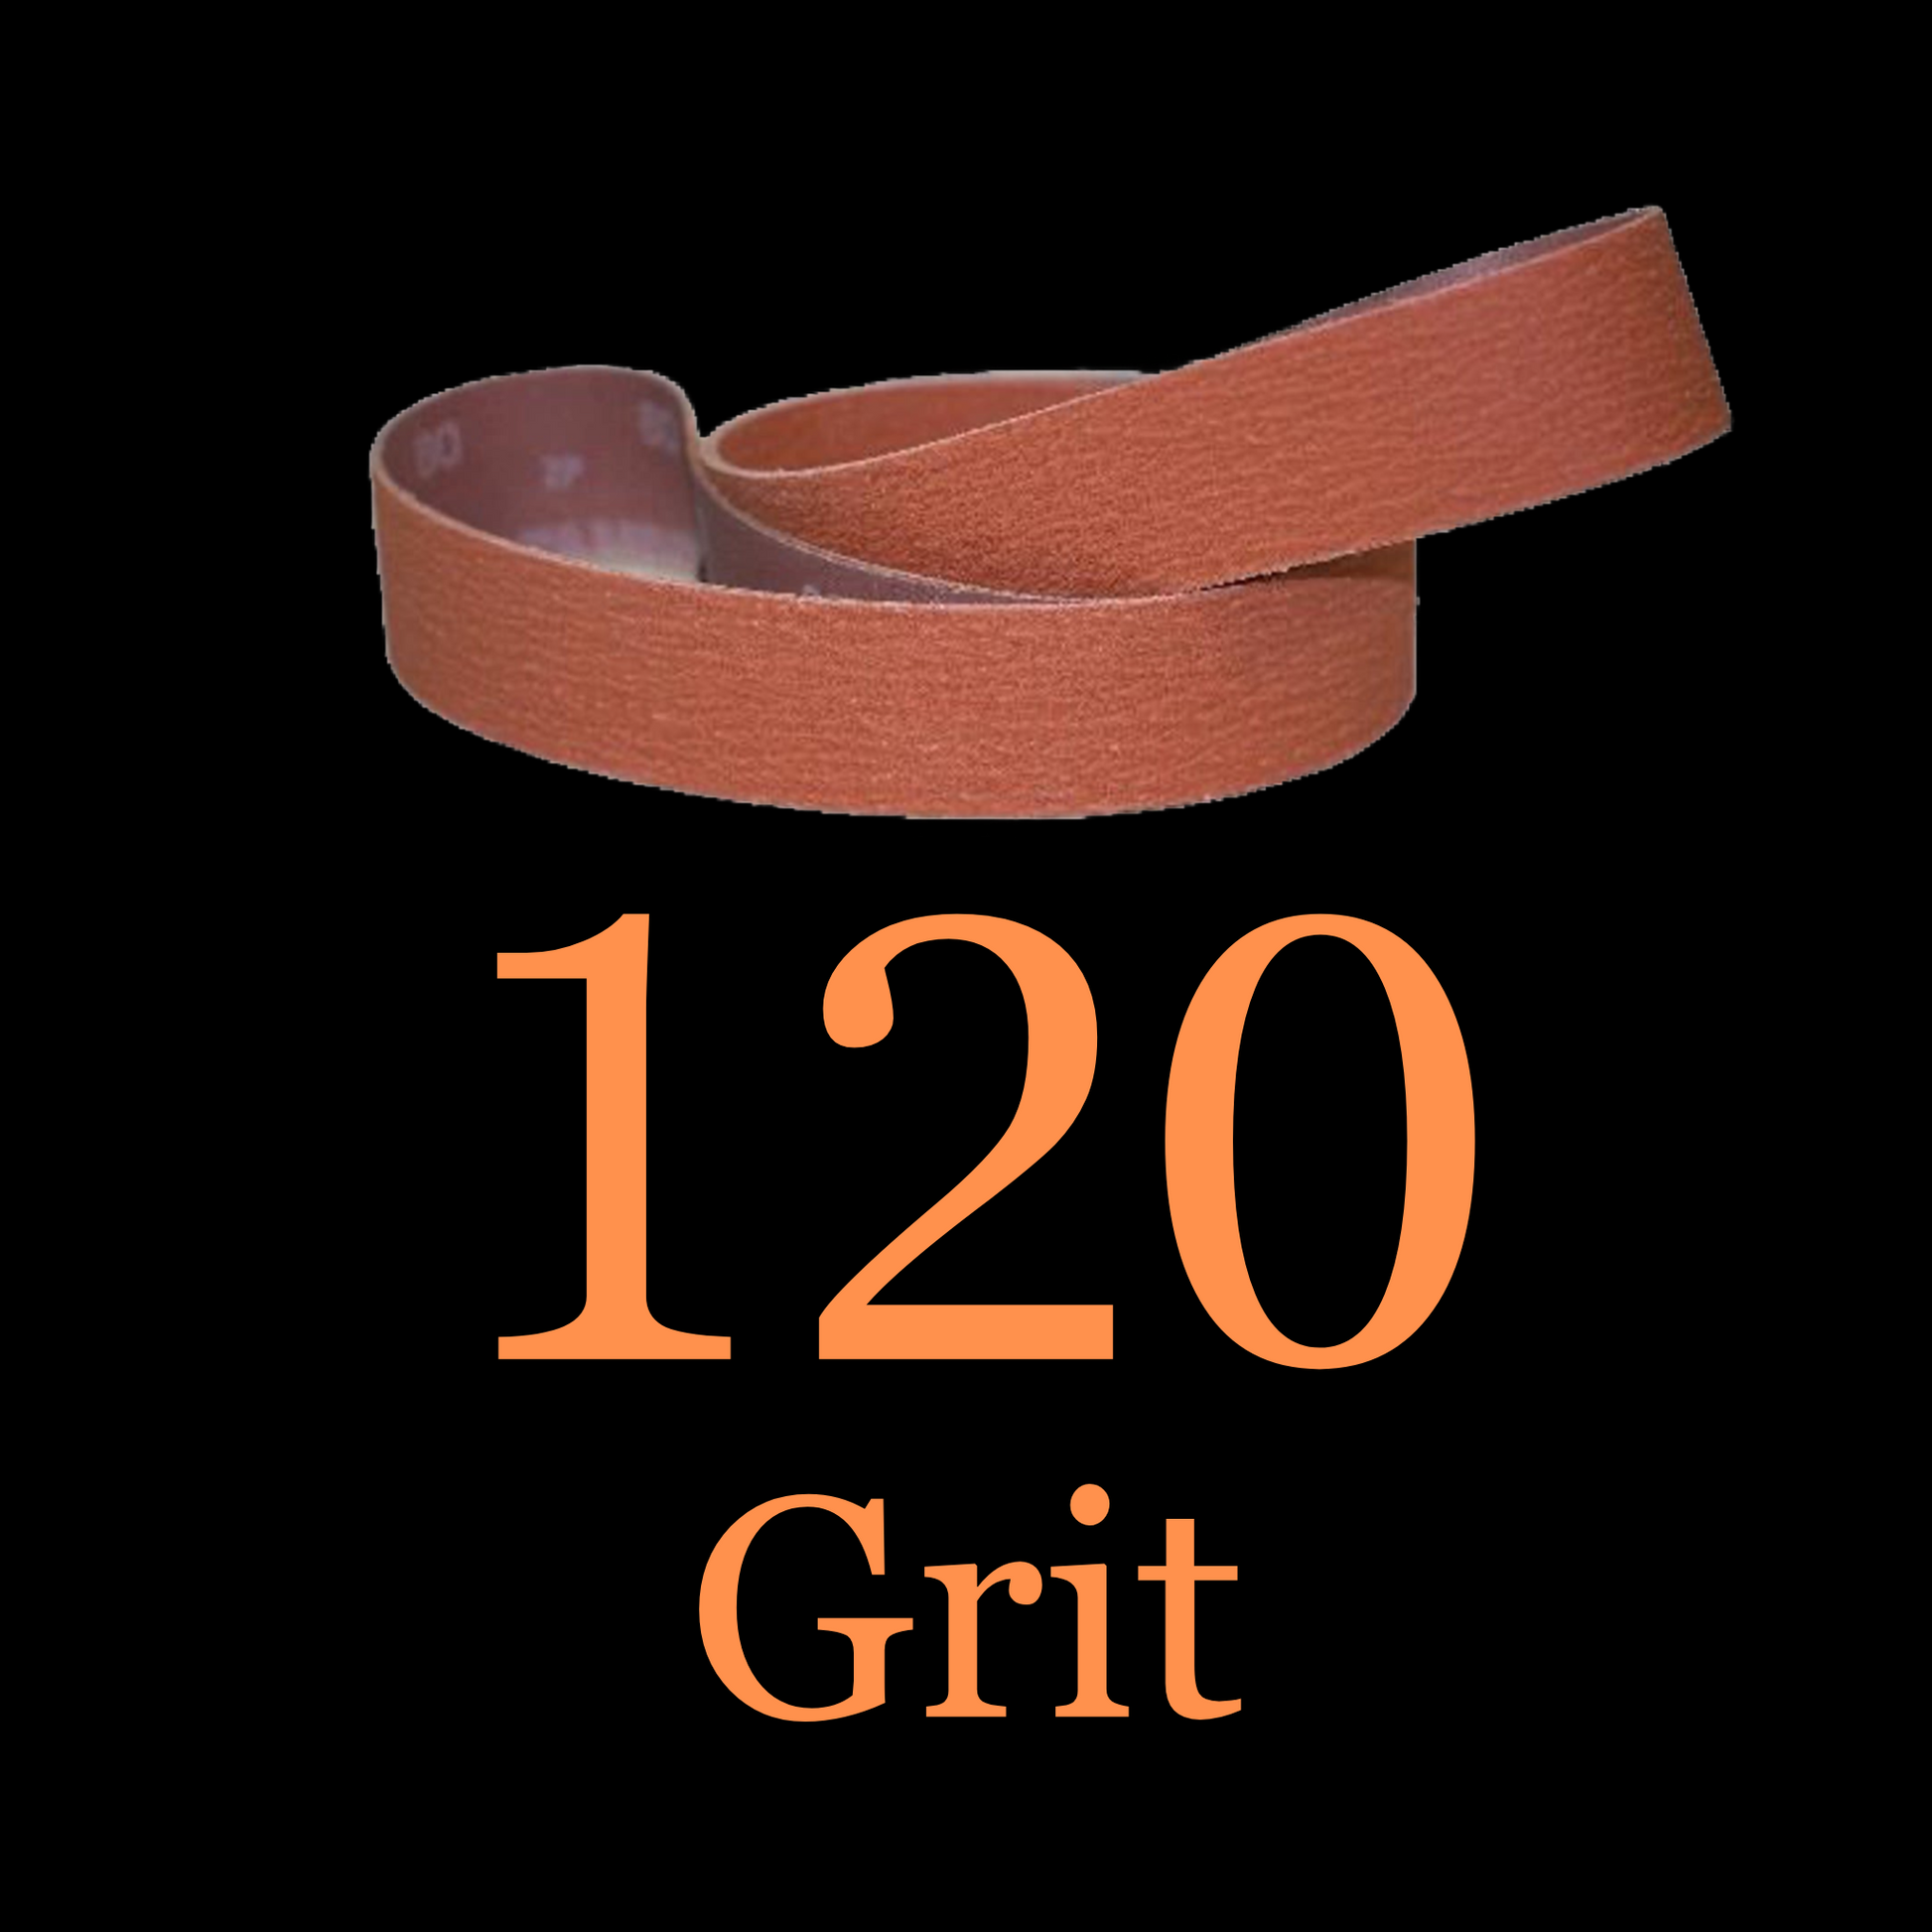 1” x 30” Blaze Ceramic Belt 120 Grit